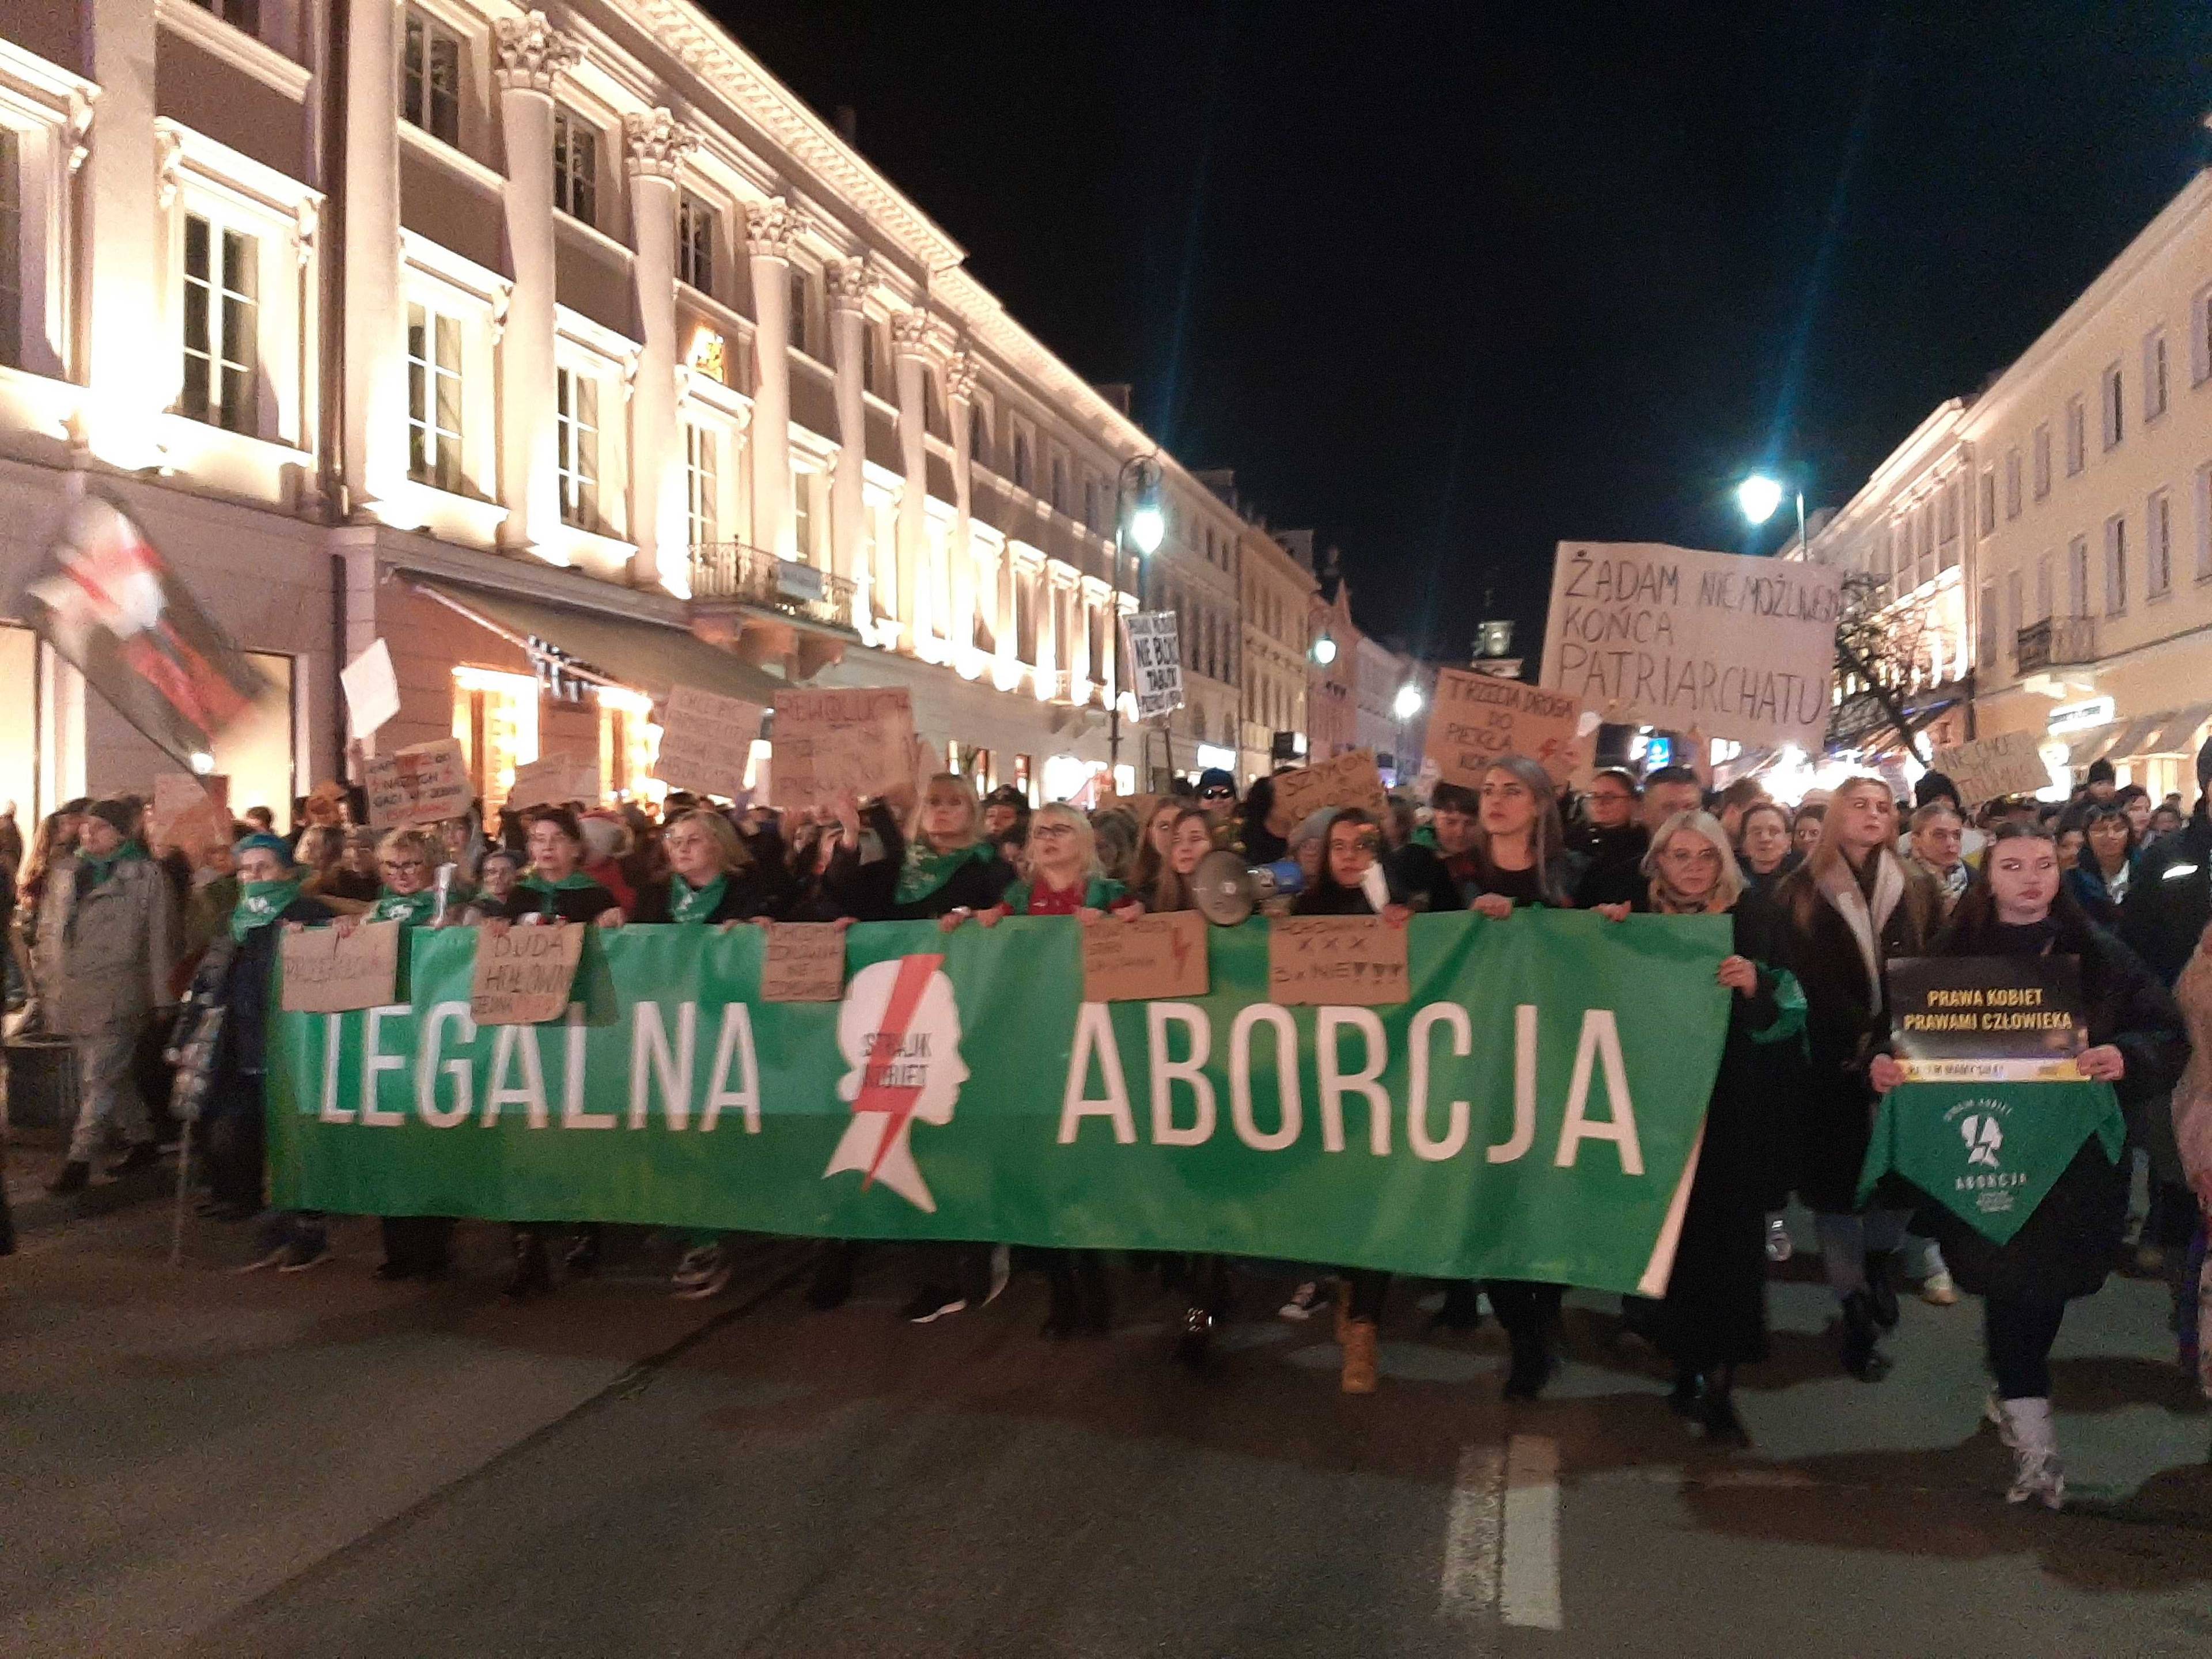 Dmonstracja z transparentem "Legalna aborcja"